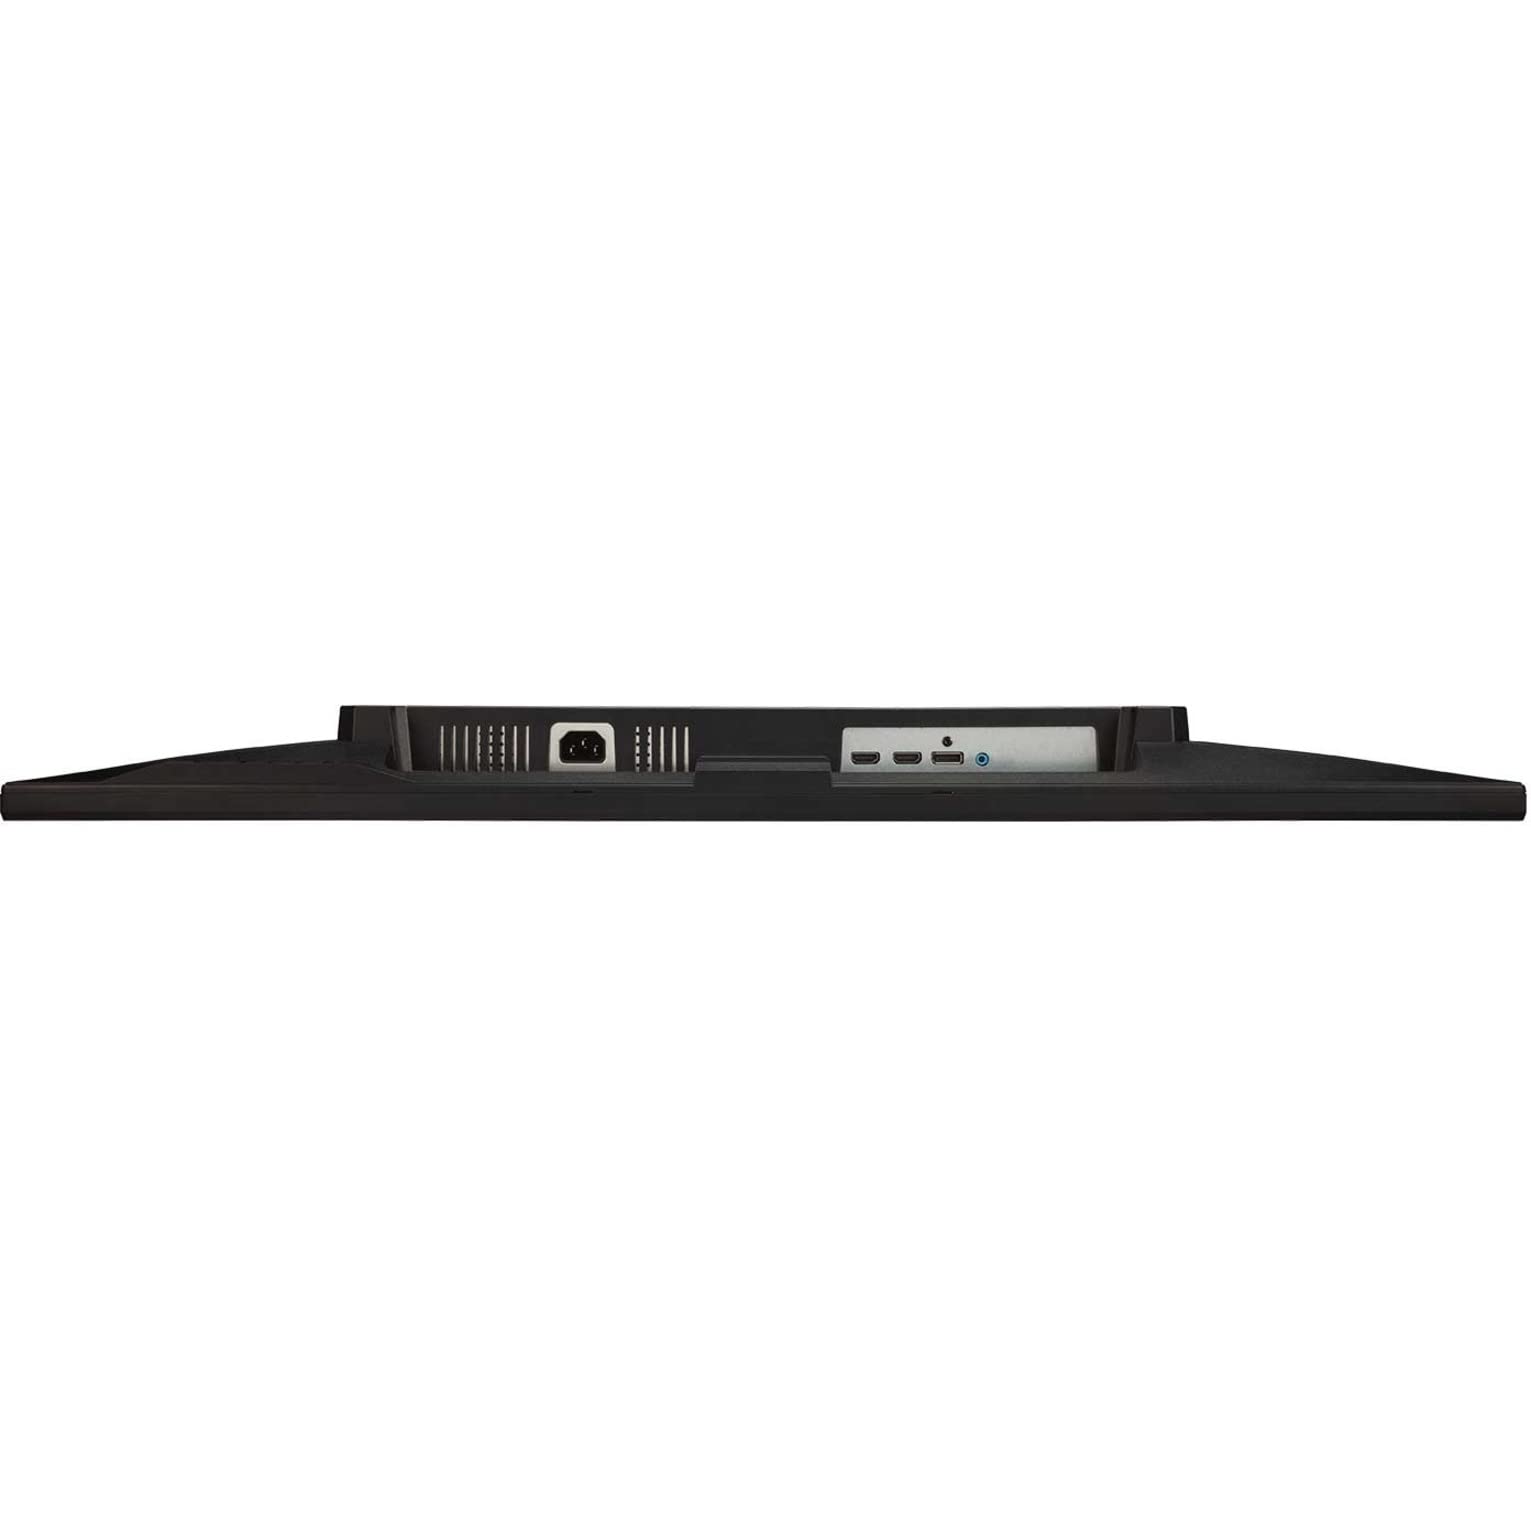 ViewSonic VA3456-MHDJ 34 Inch 21:9 UltraWide WQHD 1440p IPS Monitor with Ultra-Thin Bezels, Ergonomics Design, HDMI, and DisplayPort Inputs for Home and Office,Black